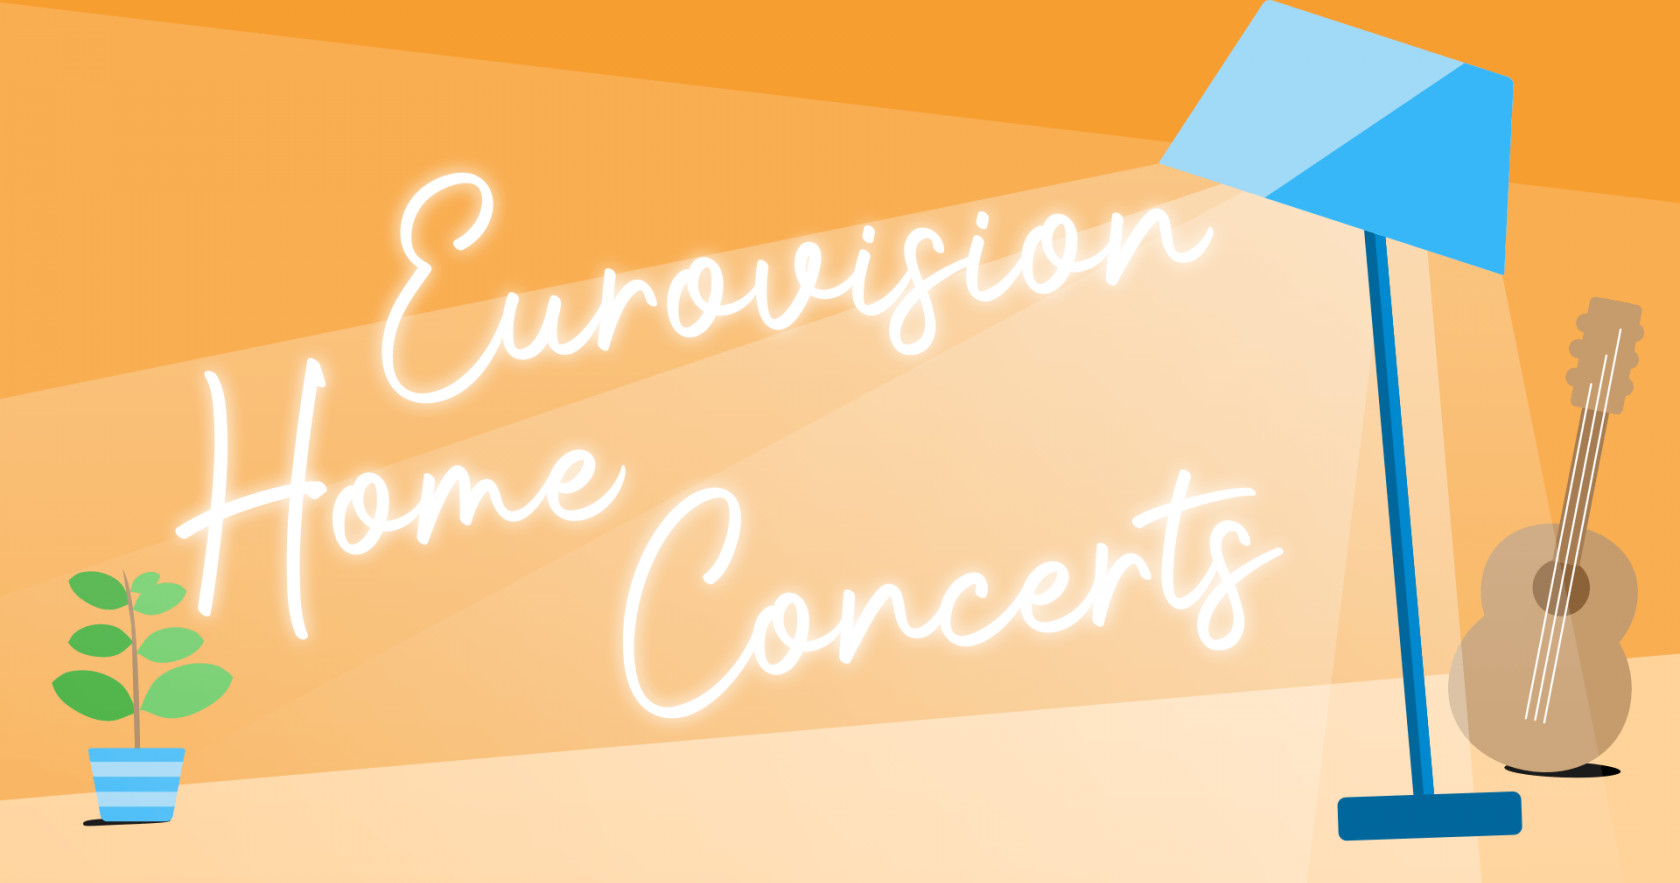 Eurovision Home Concerts: Ποιοι είναι οι καλεσμένοι του έβδομου επεισοδίου;